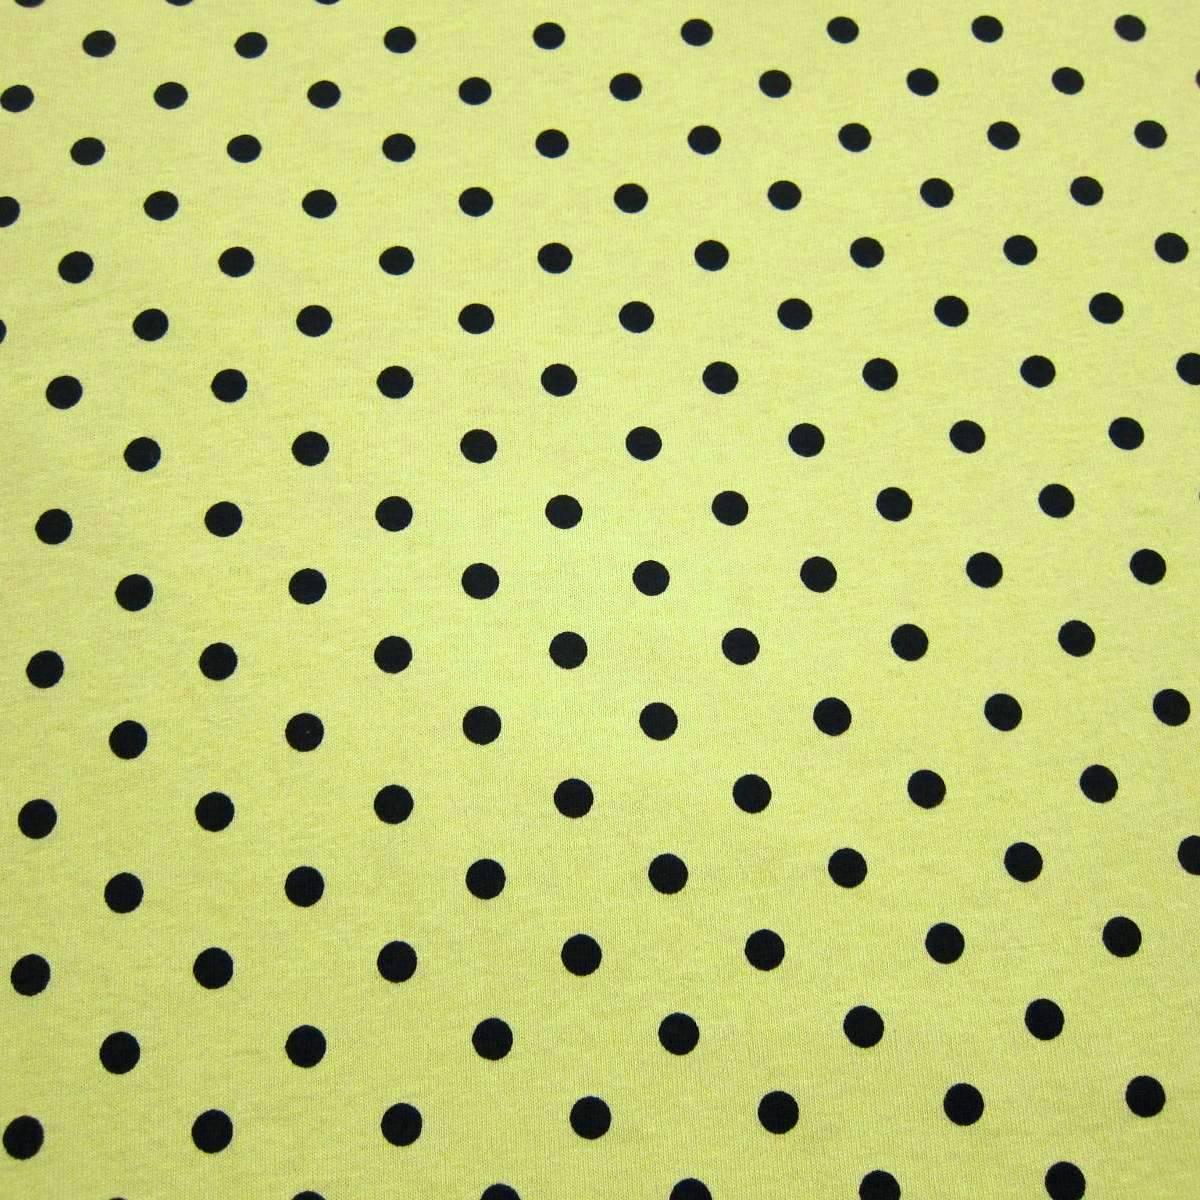 Black Dots On Yellow Cotton Jersey